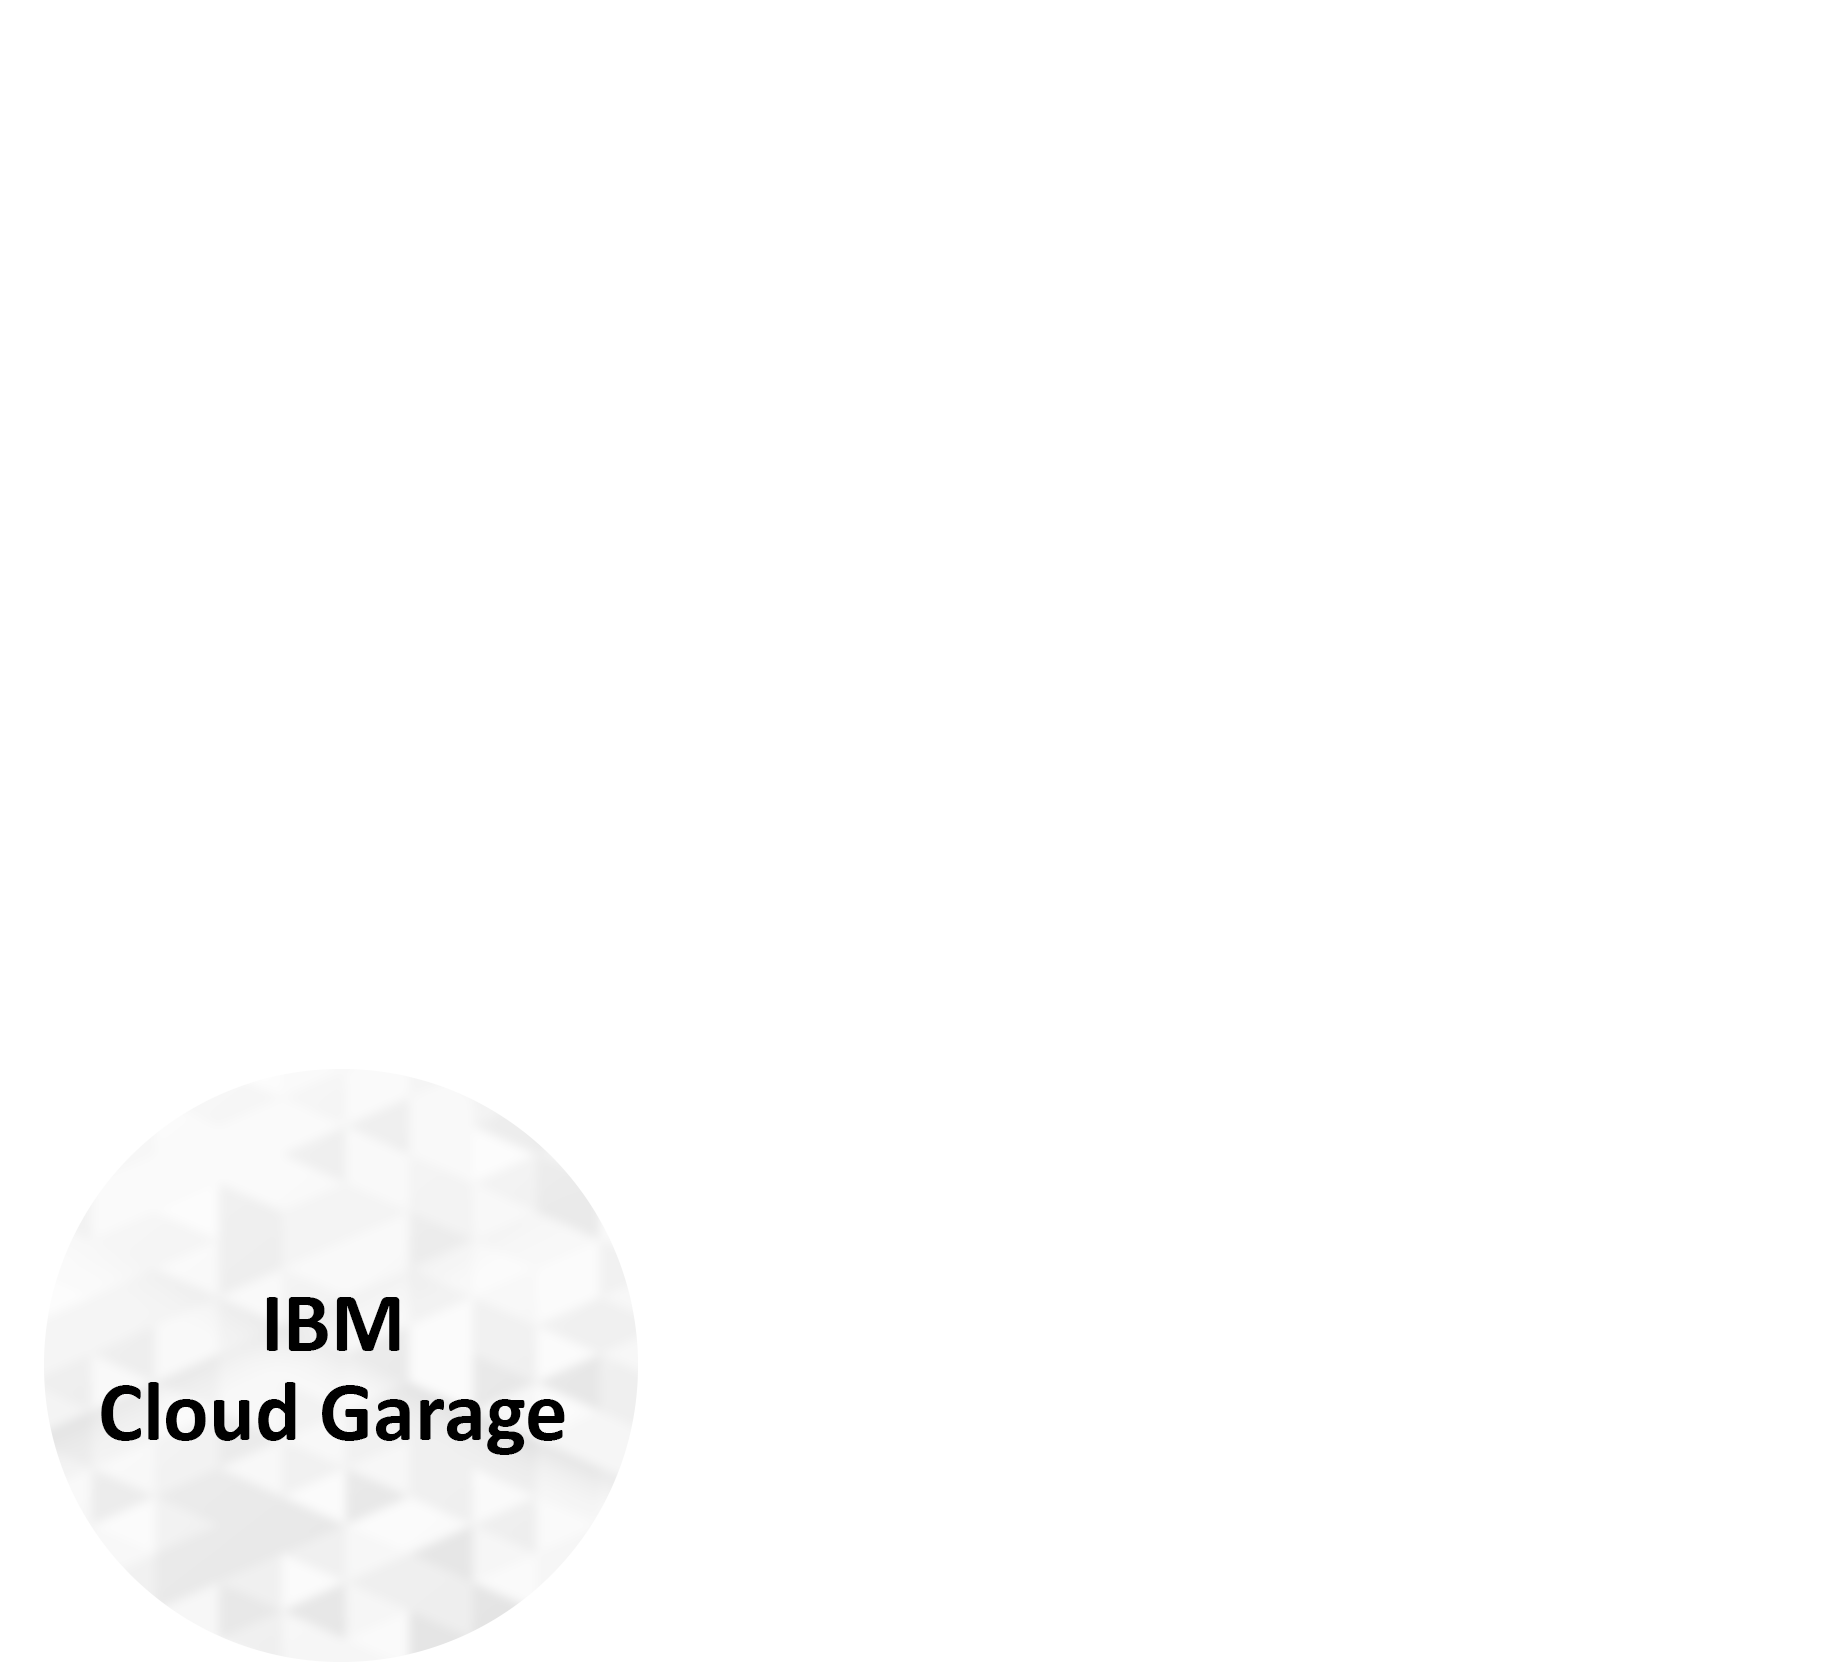 IBM Storage Cloud